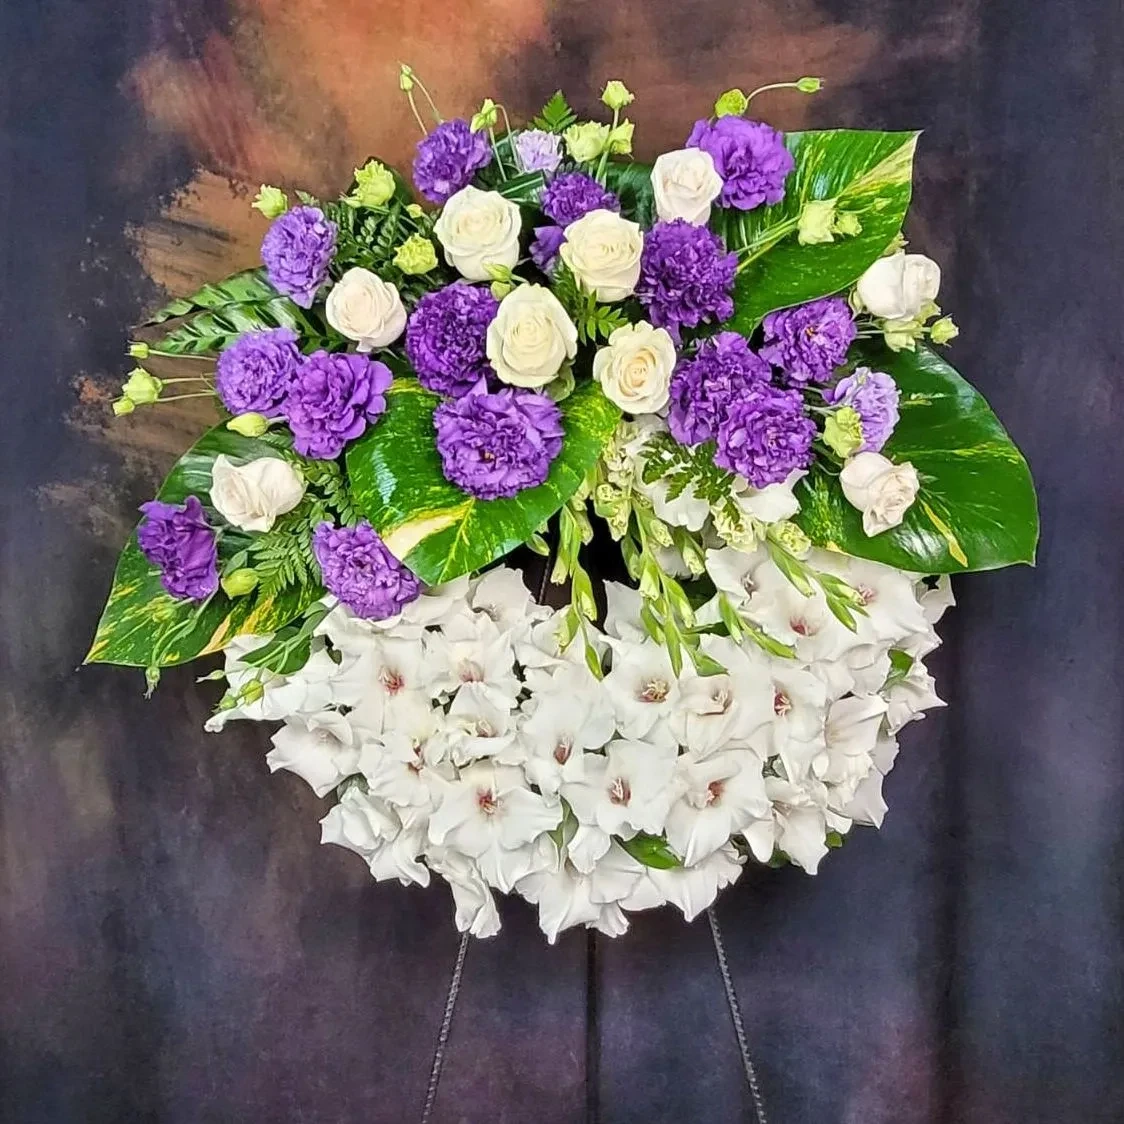 Funeral wreath in white-purple